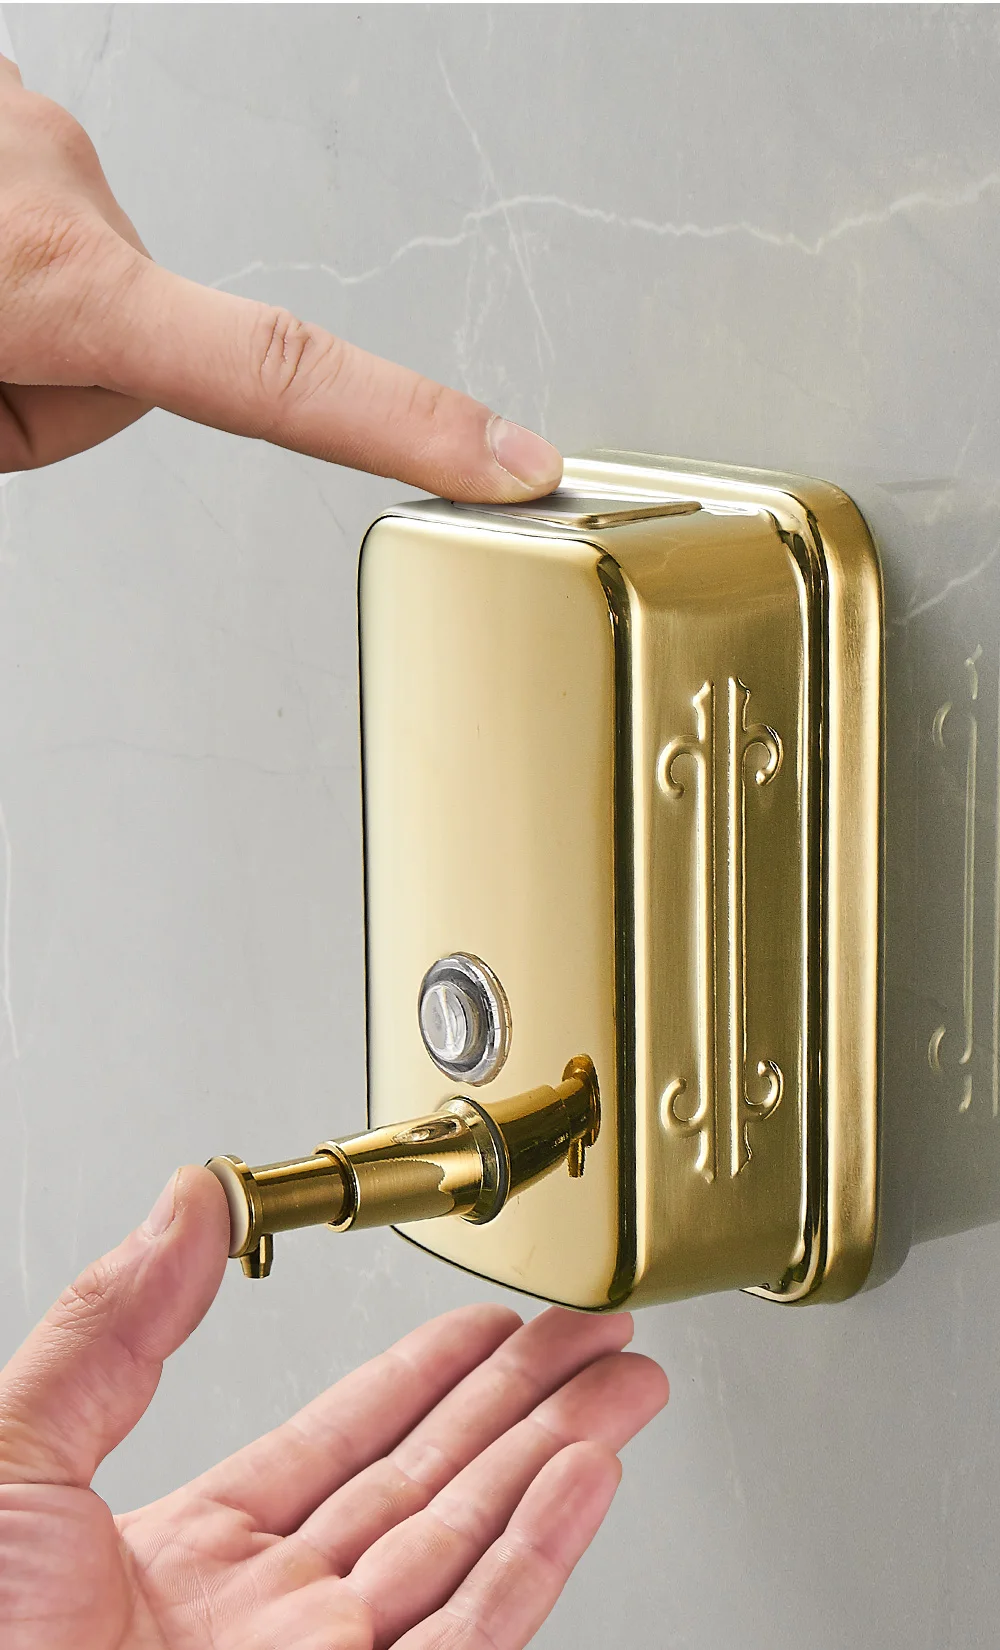 Stainless Steel Wall-mounted Golden Manual Liquid Soap Dispenser Shampoo